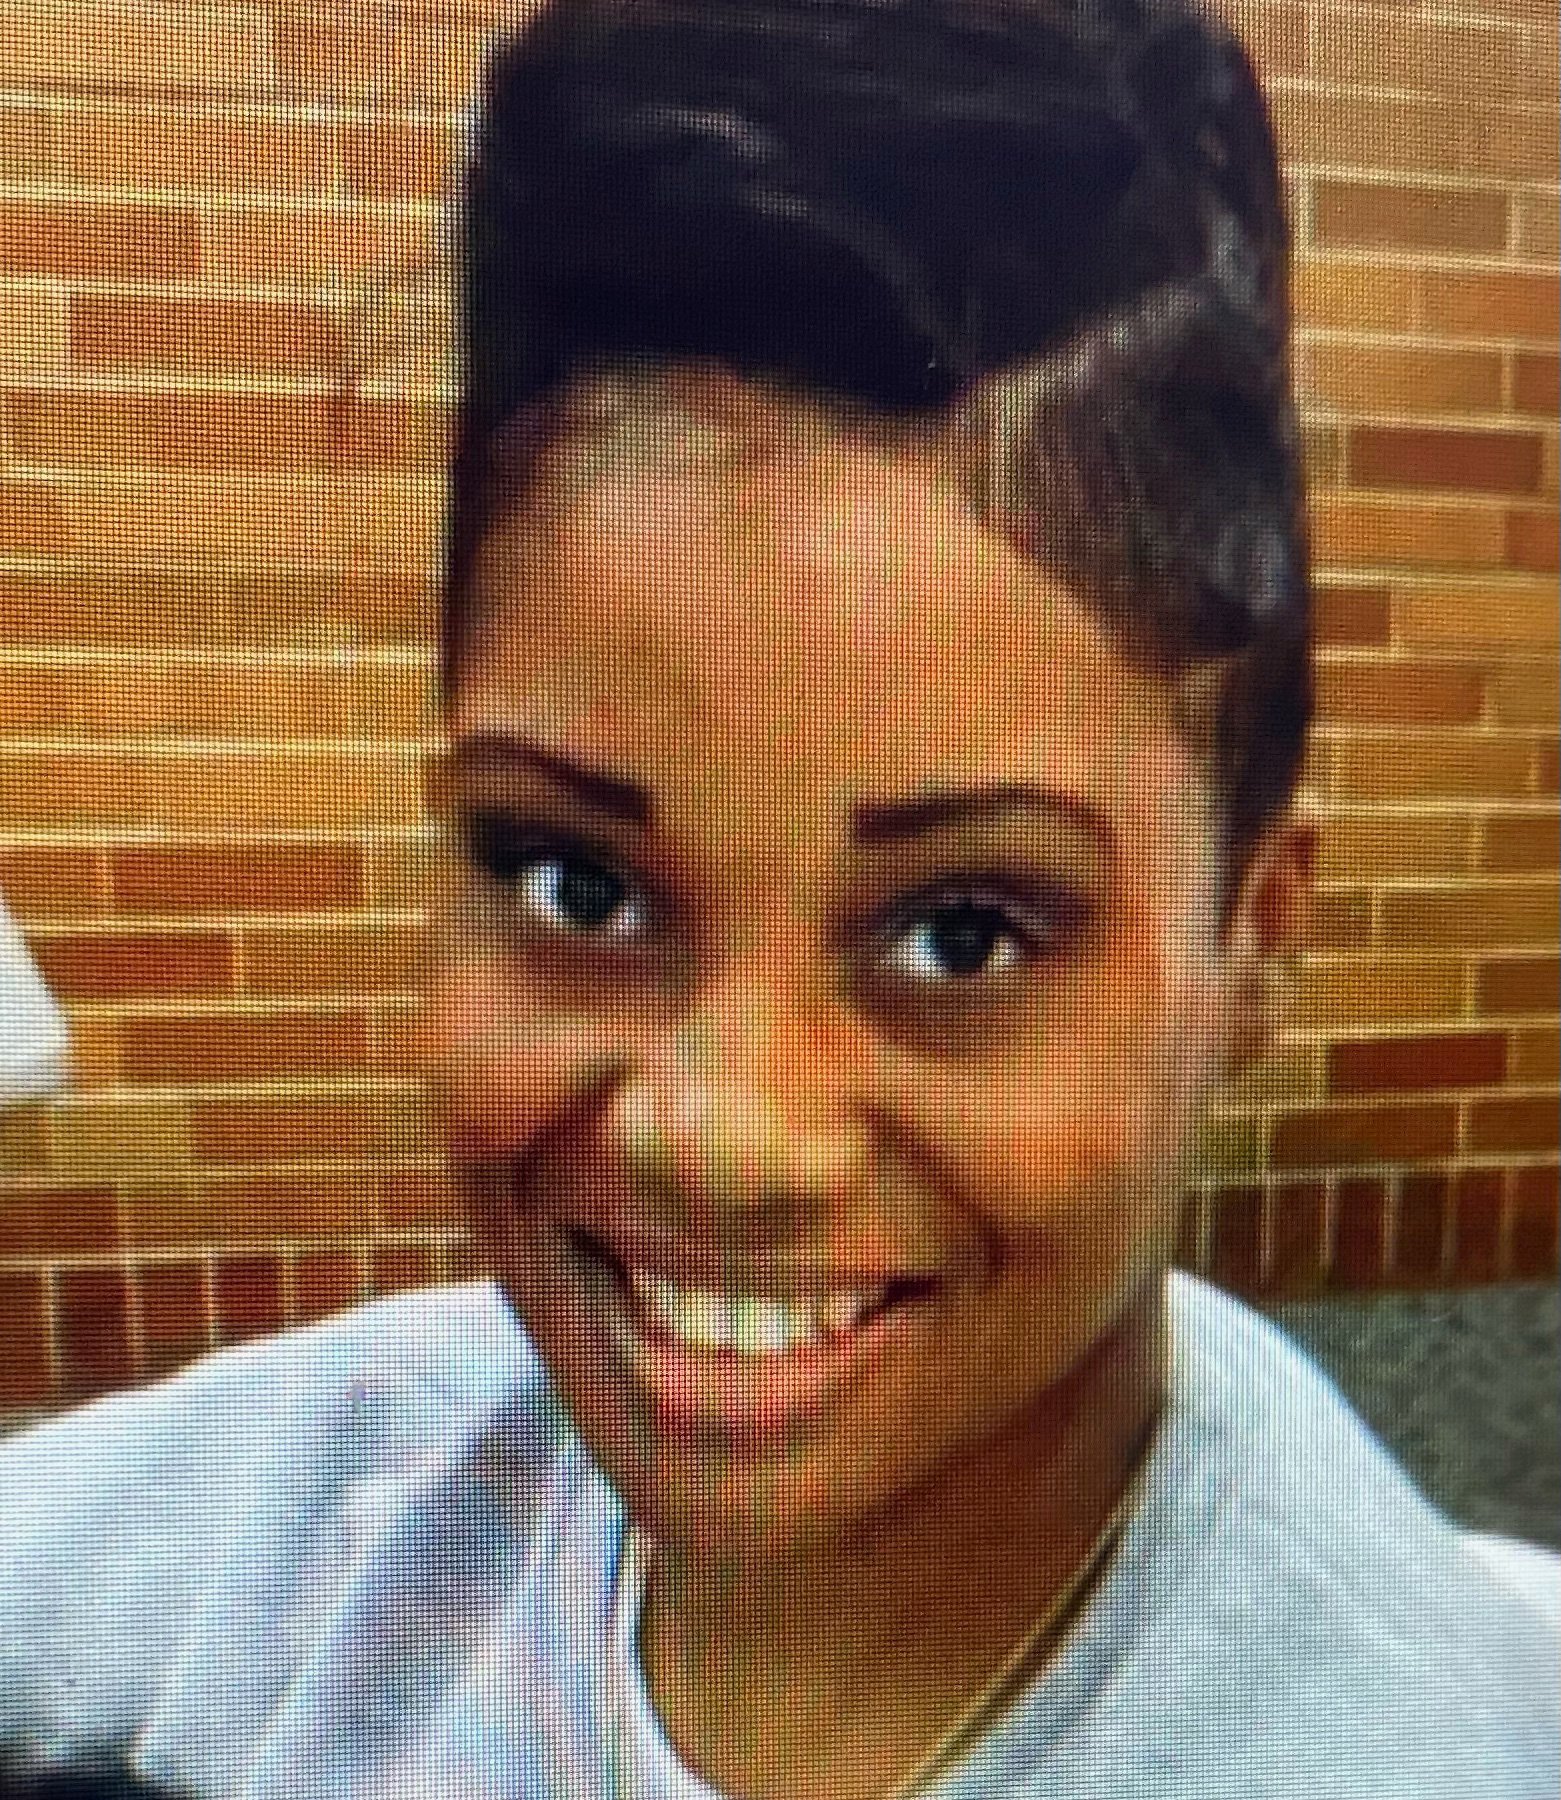 DeBraca Harris at Logan Correctional Center in 2018.